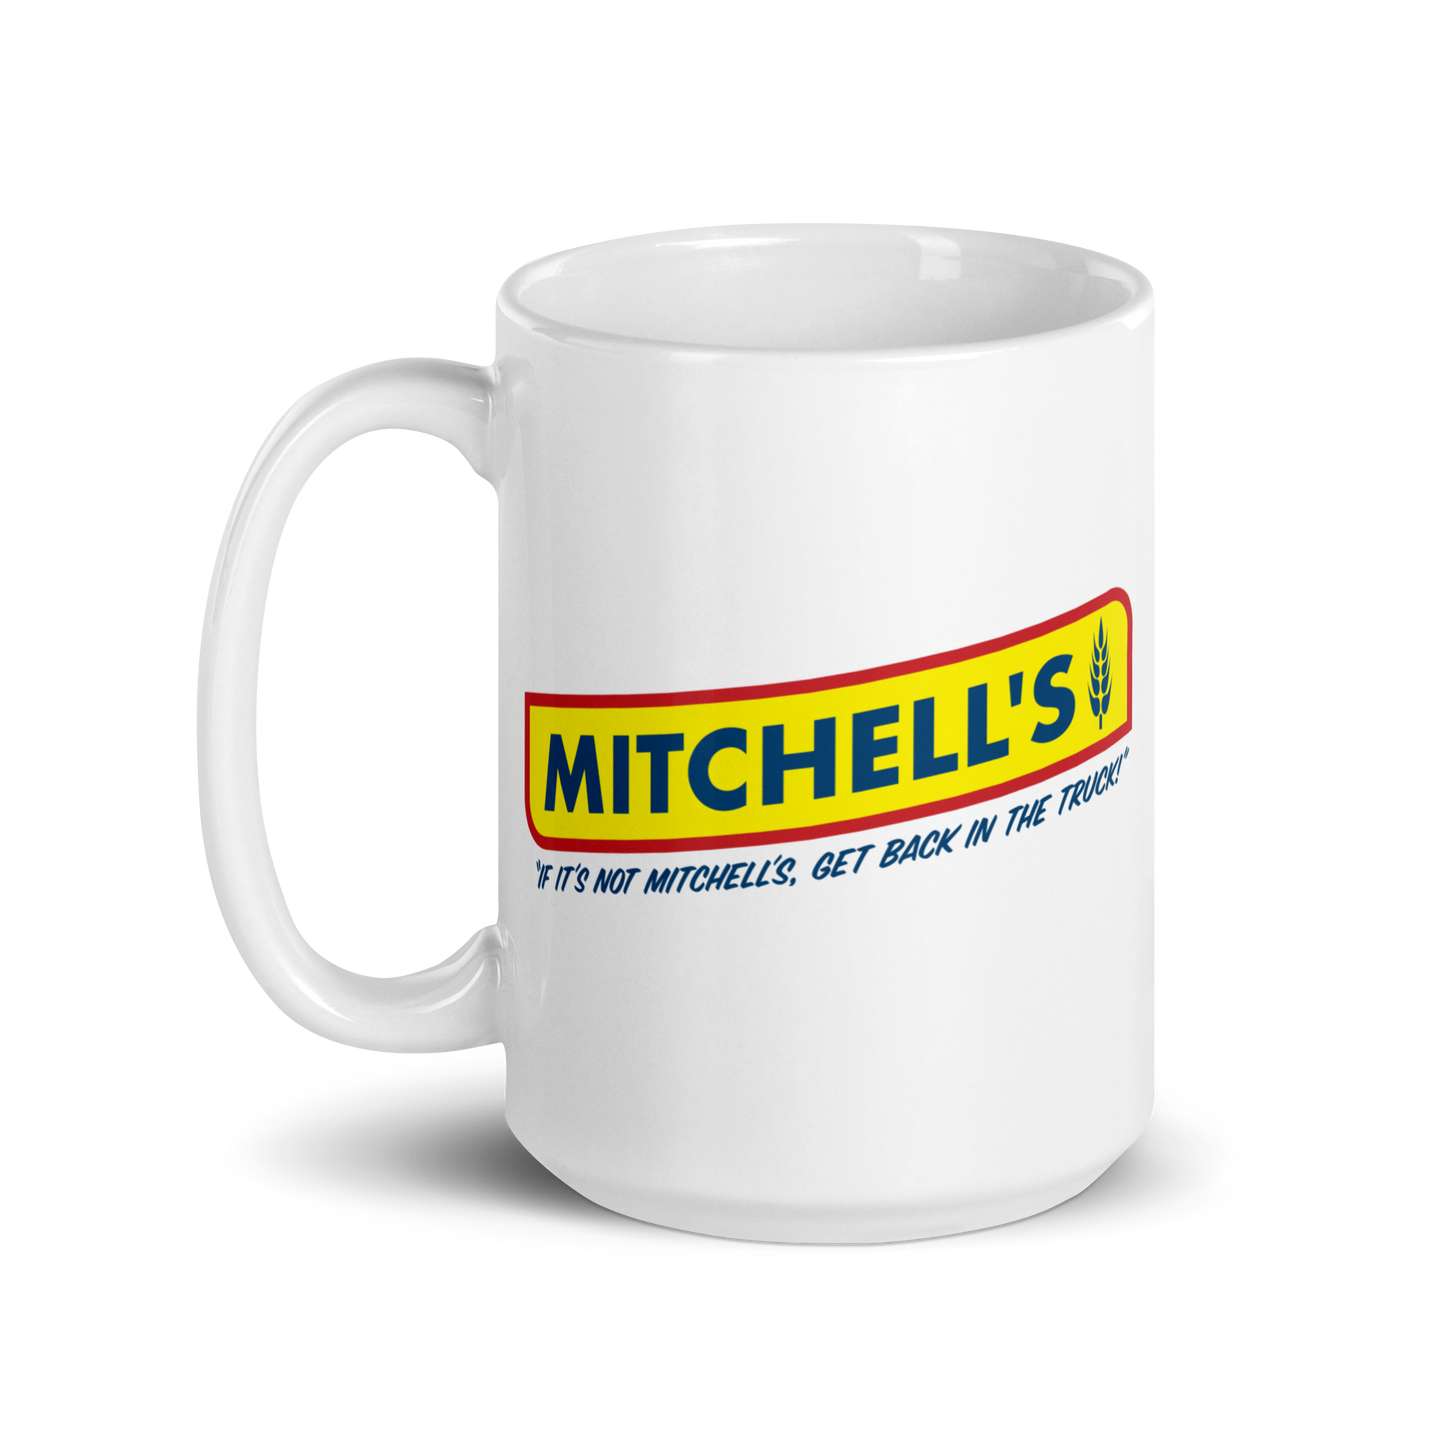 Mitchell's mug